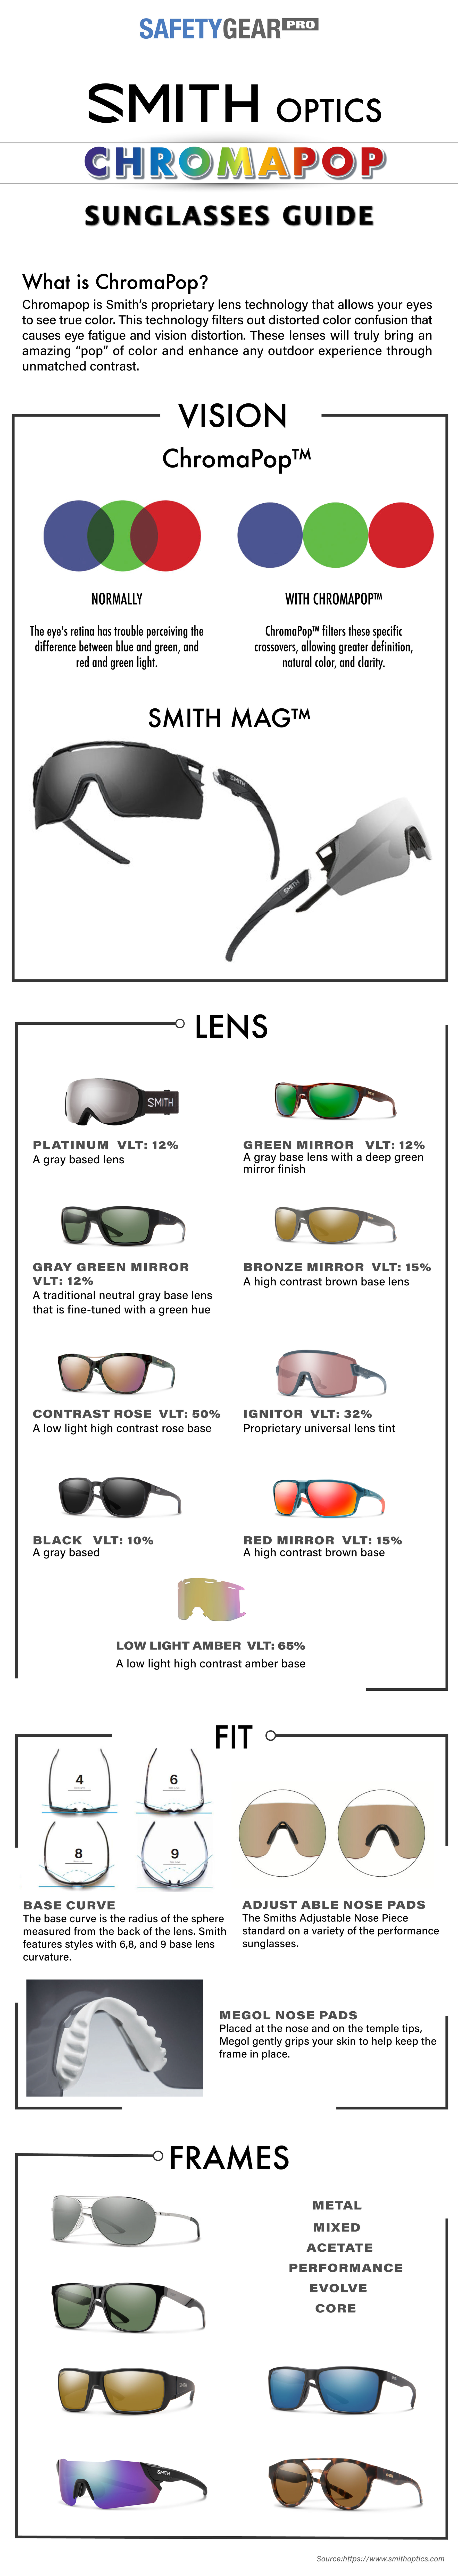 Smith Optics: ChromaPop Sunglasses Guide Infographic